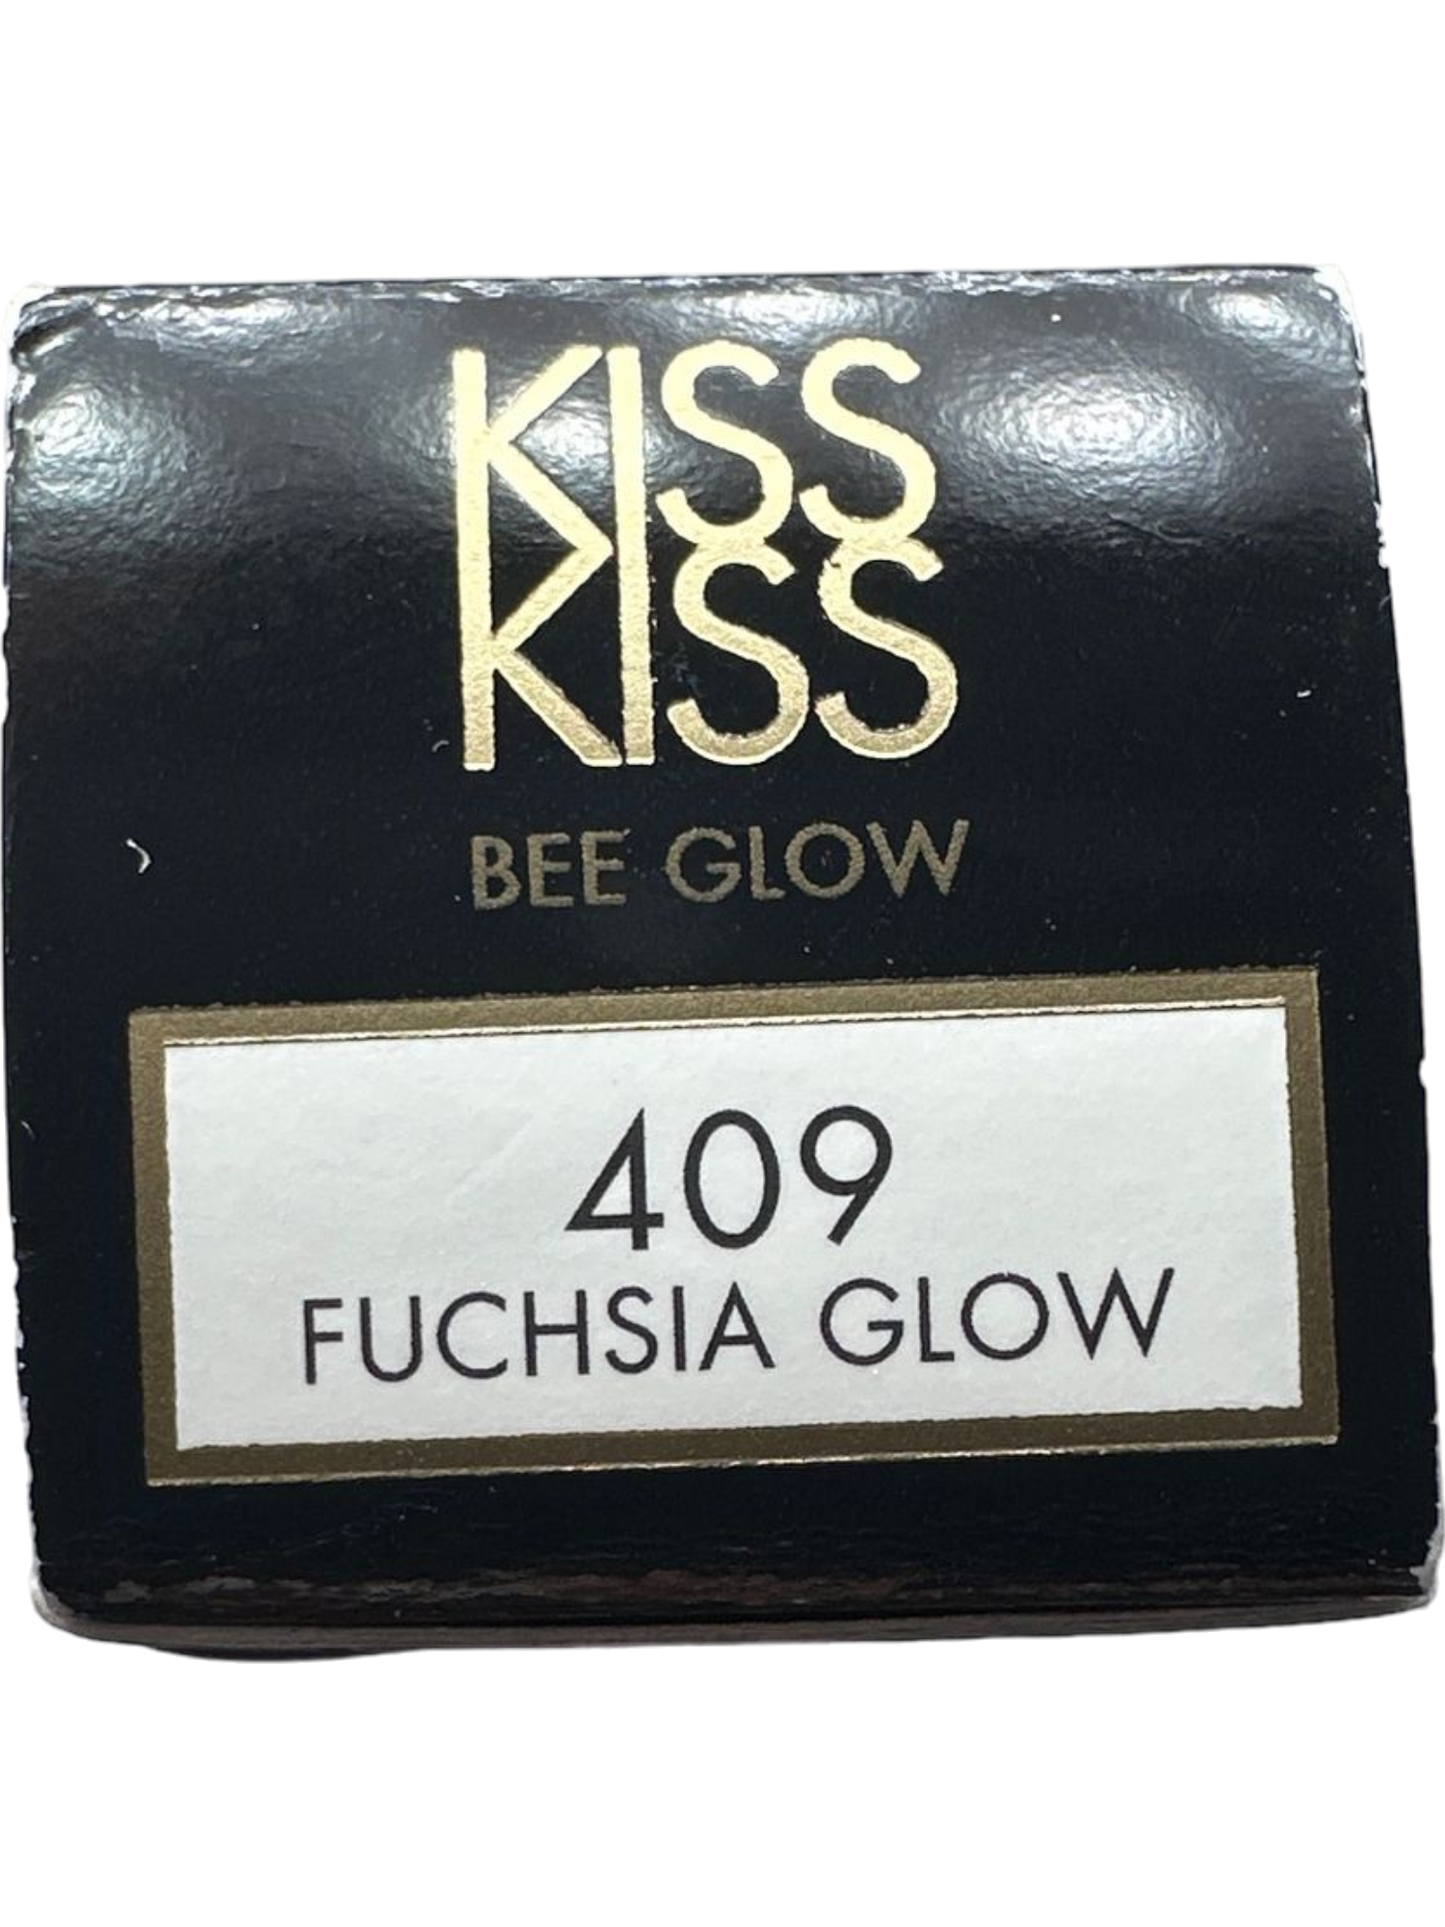 Guerlain KissKiss Bee Glow Lip Balm Tinted Hydrating 3.2g